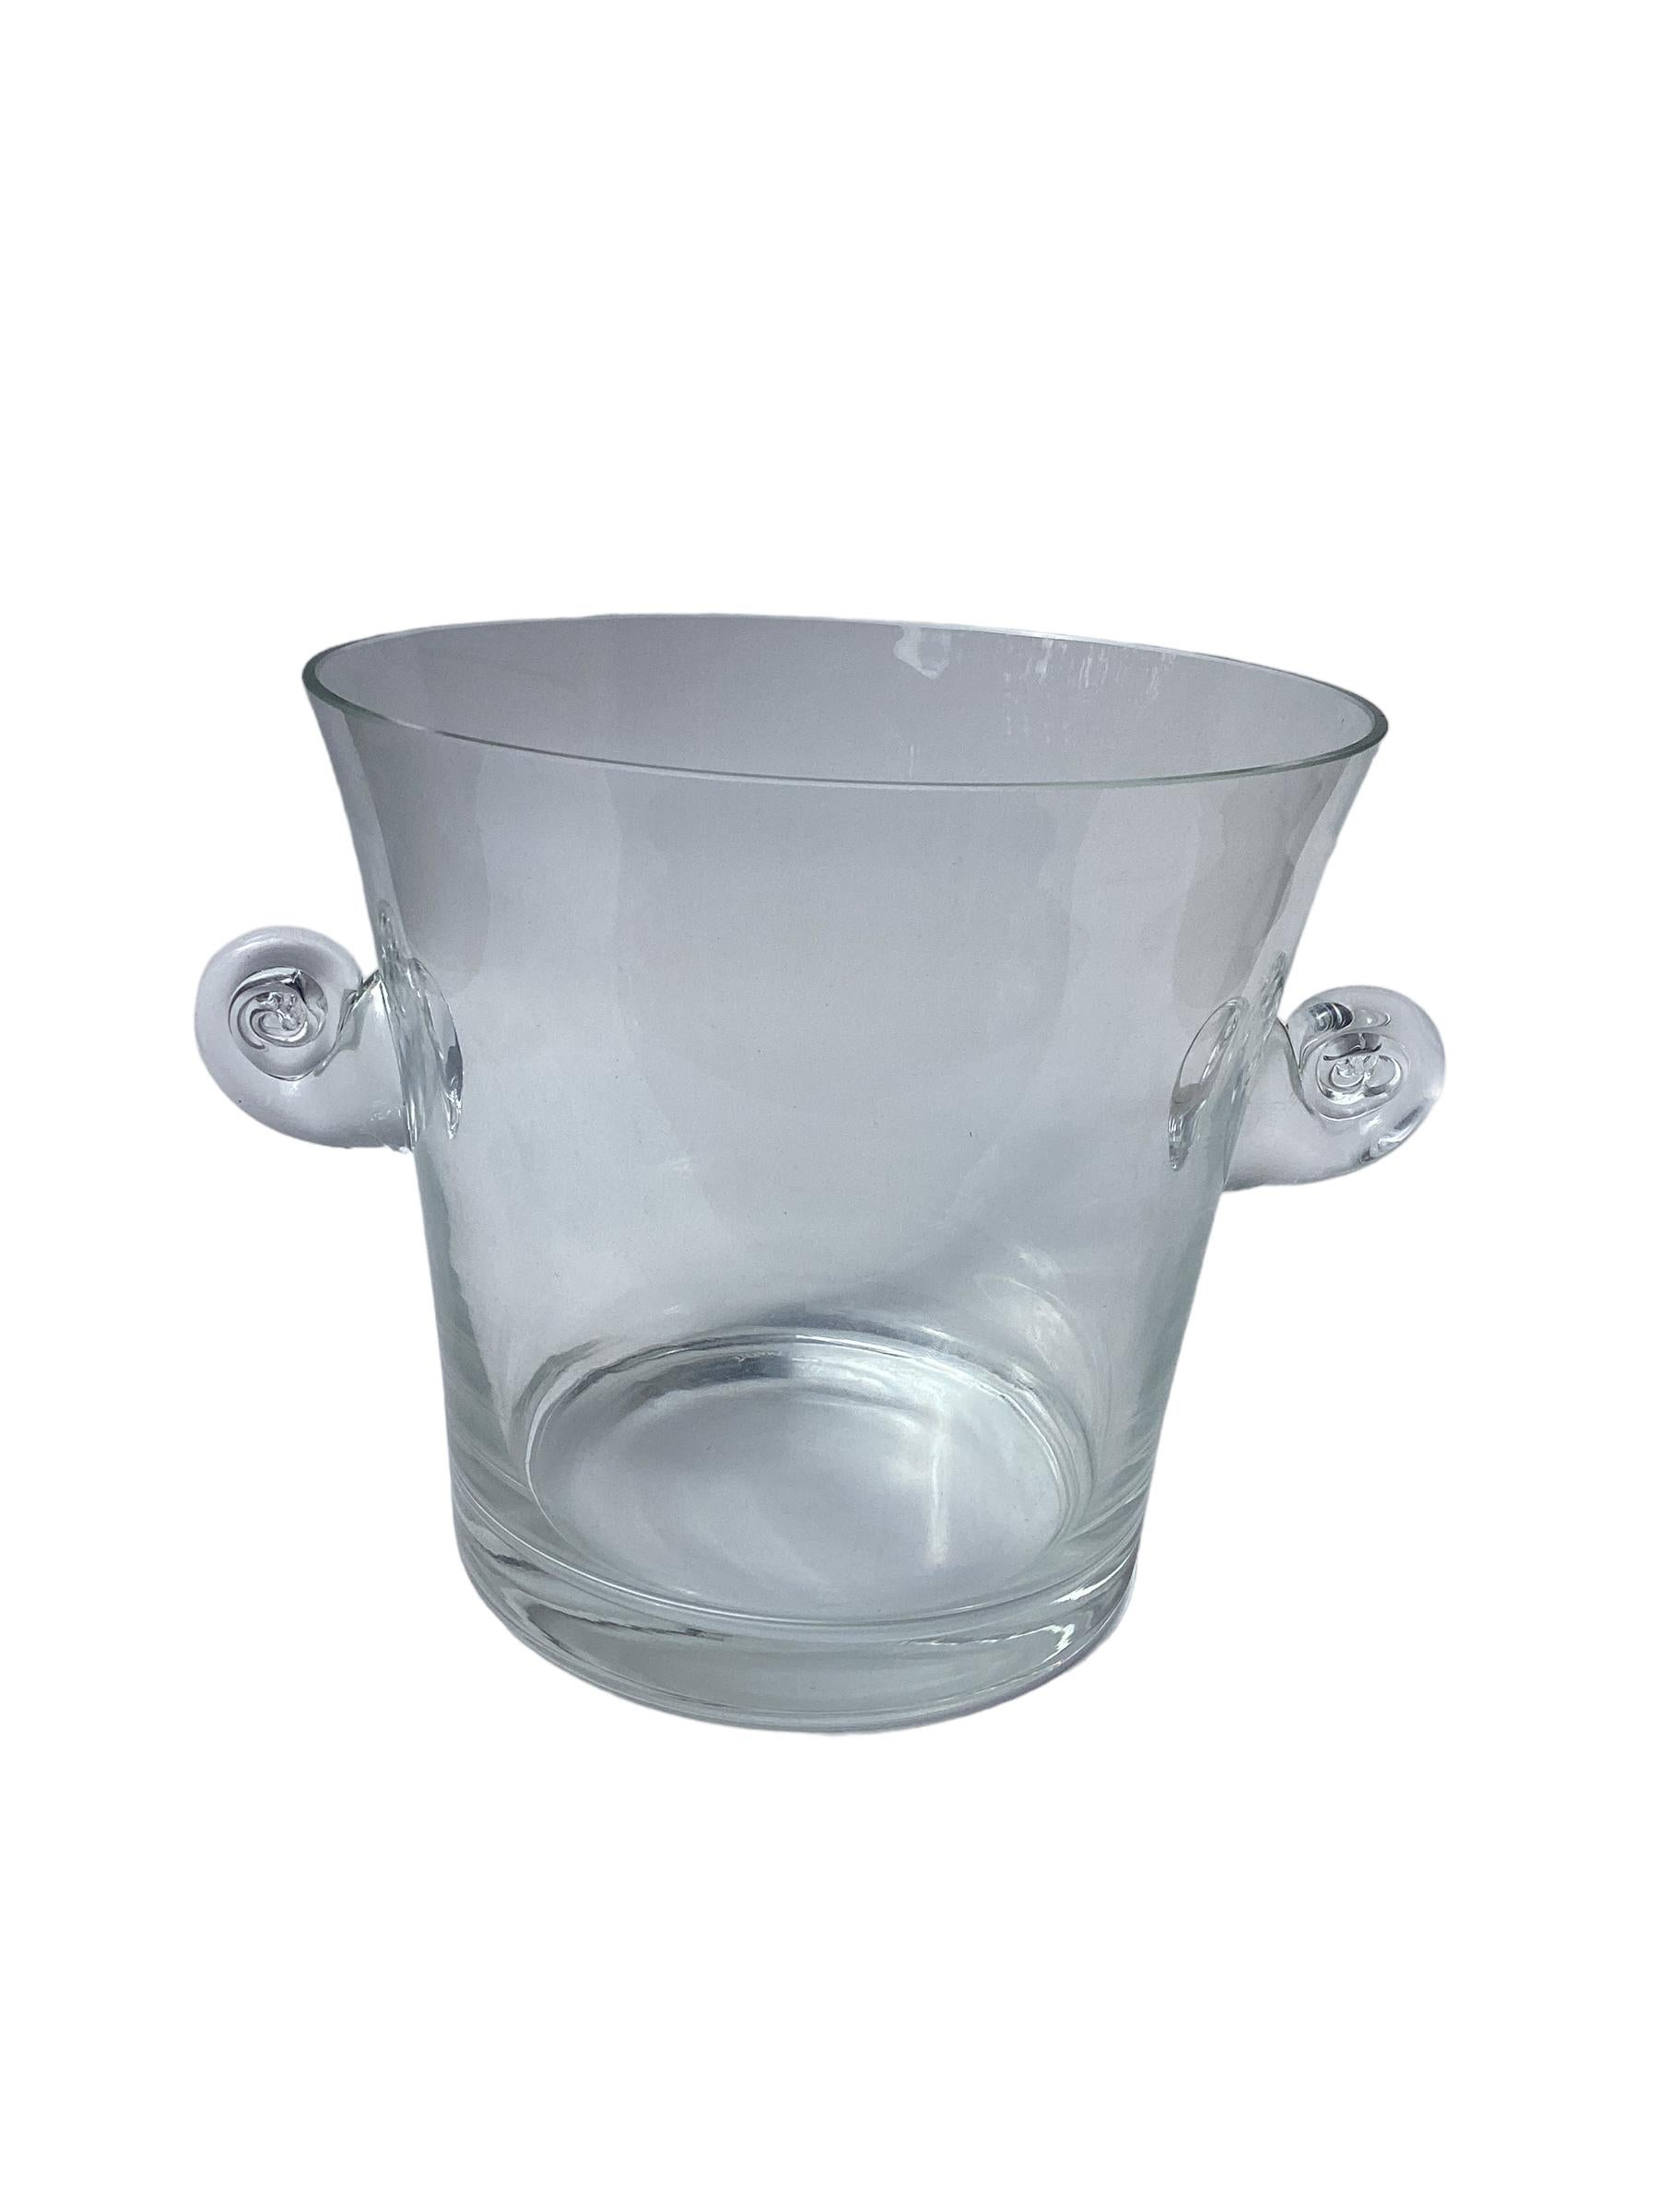 Vintage Tiffany Crystal Ice Bucket, 1960s For Sale 3